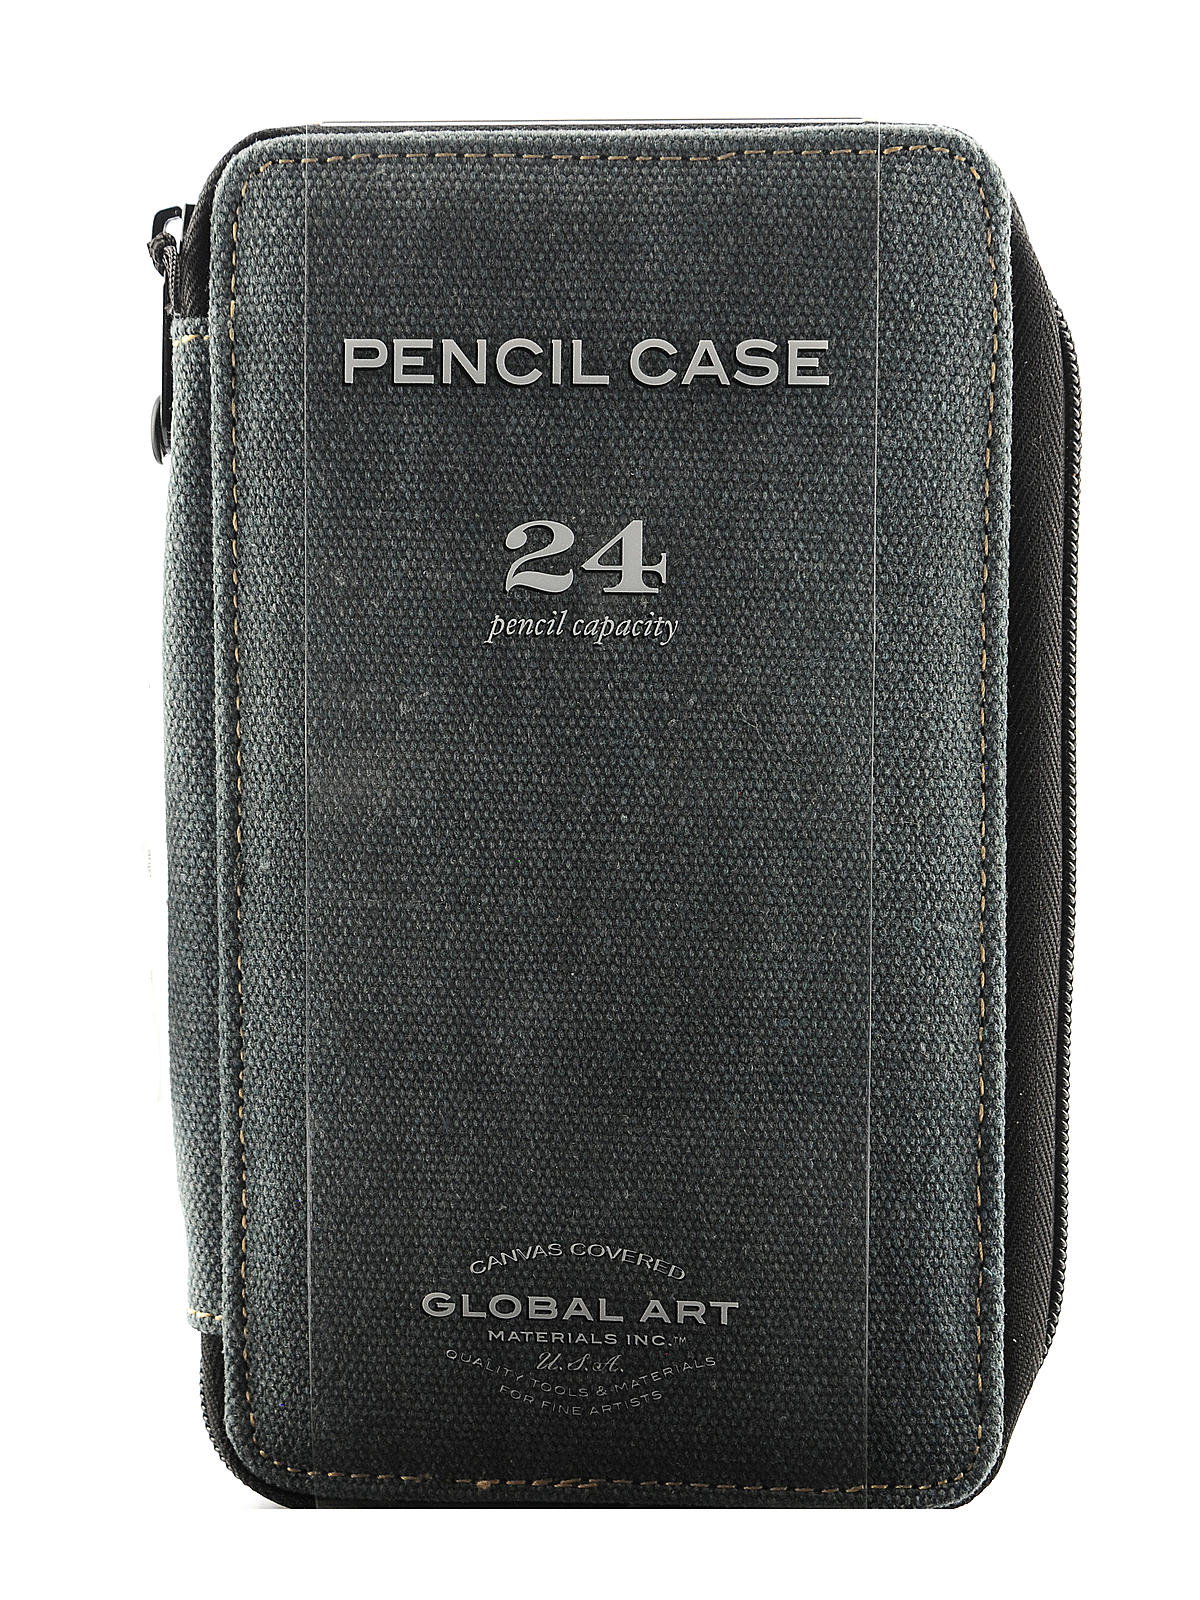 Global Art Canvas 48 Pencil Case Black